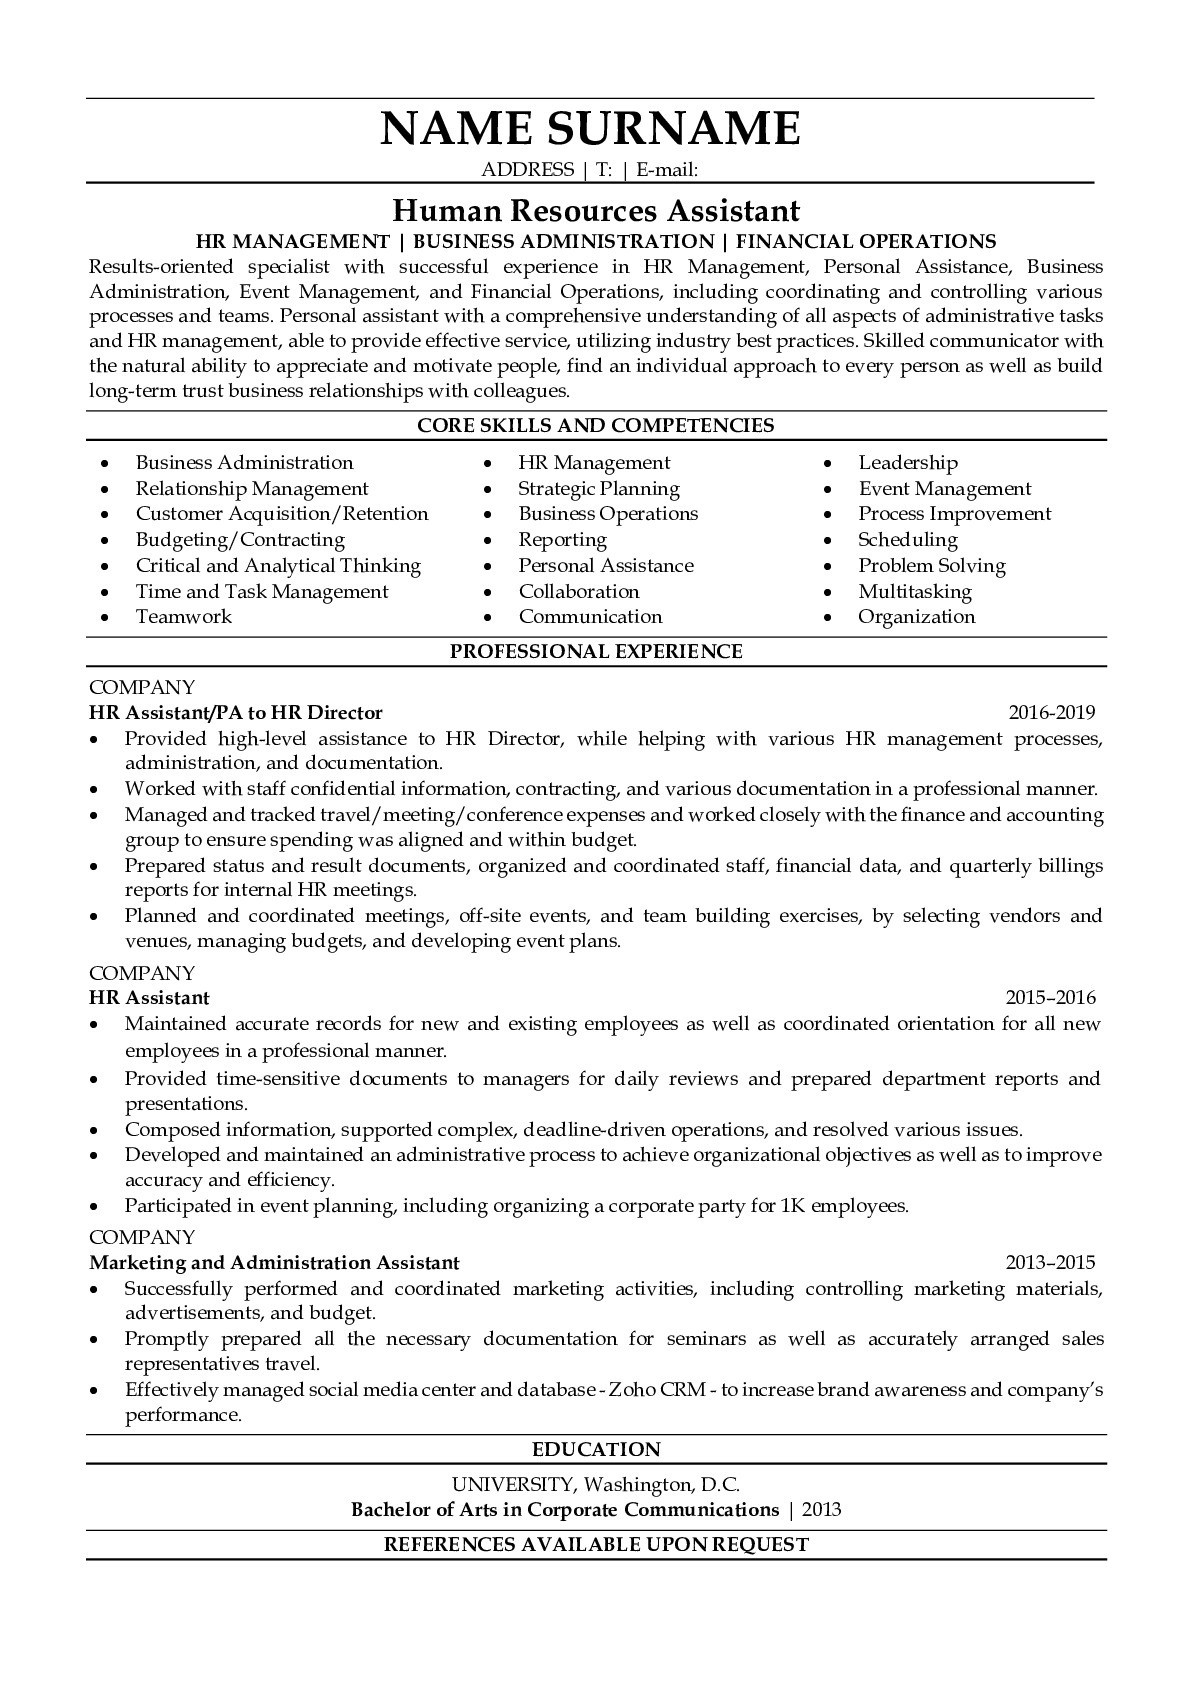 Free Sample Resume for Human Resources assistant Professional Human Resources assistant Resume Sample Resumegets.com